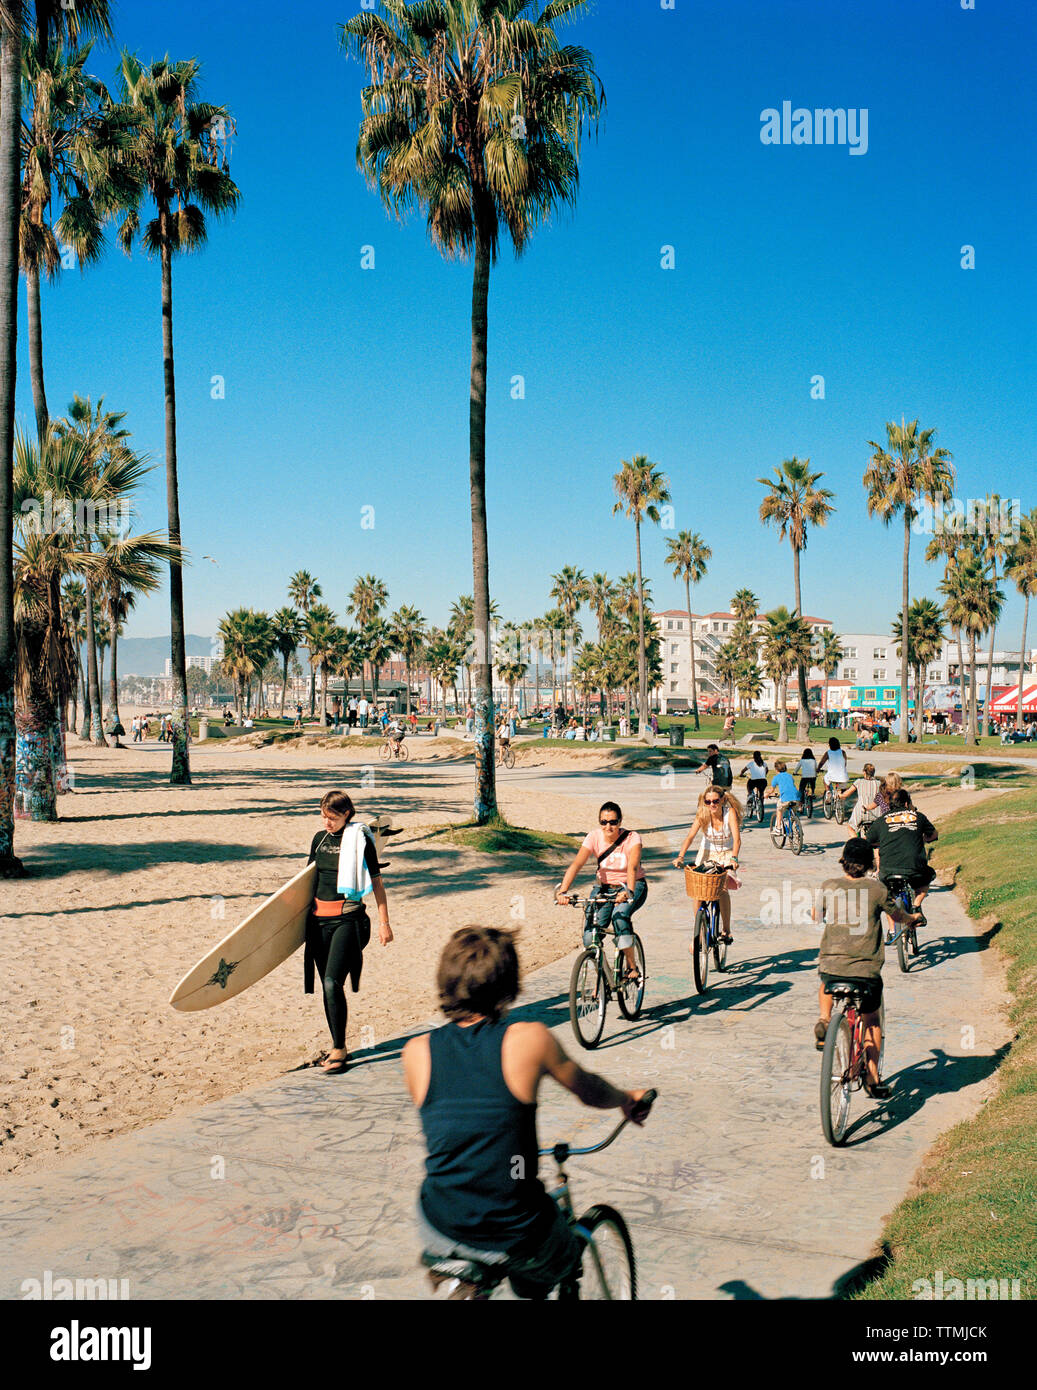 USA, California, Los Angeles, Venice Beach, surfers and bikers on the Venice Beach Boardwalk Stock Photo